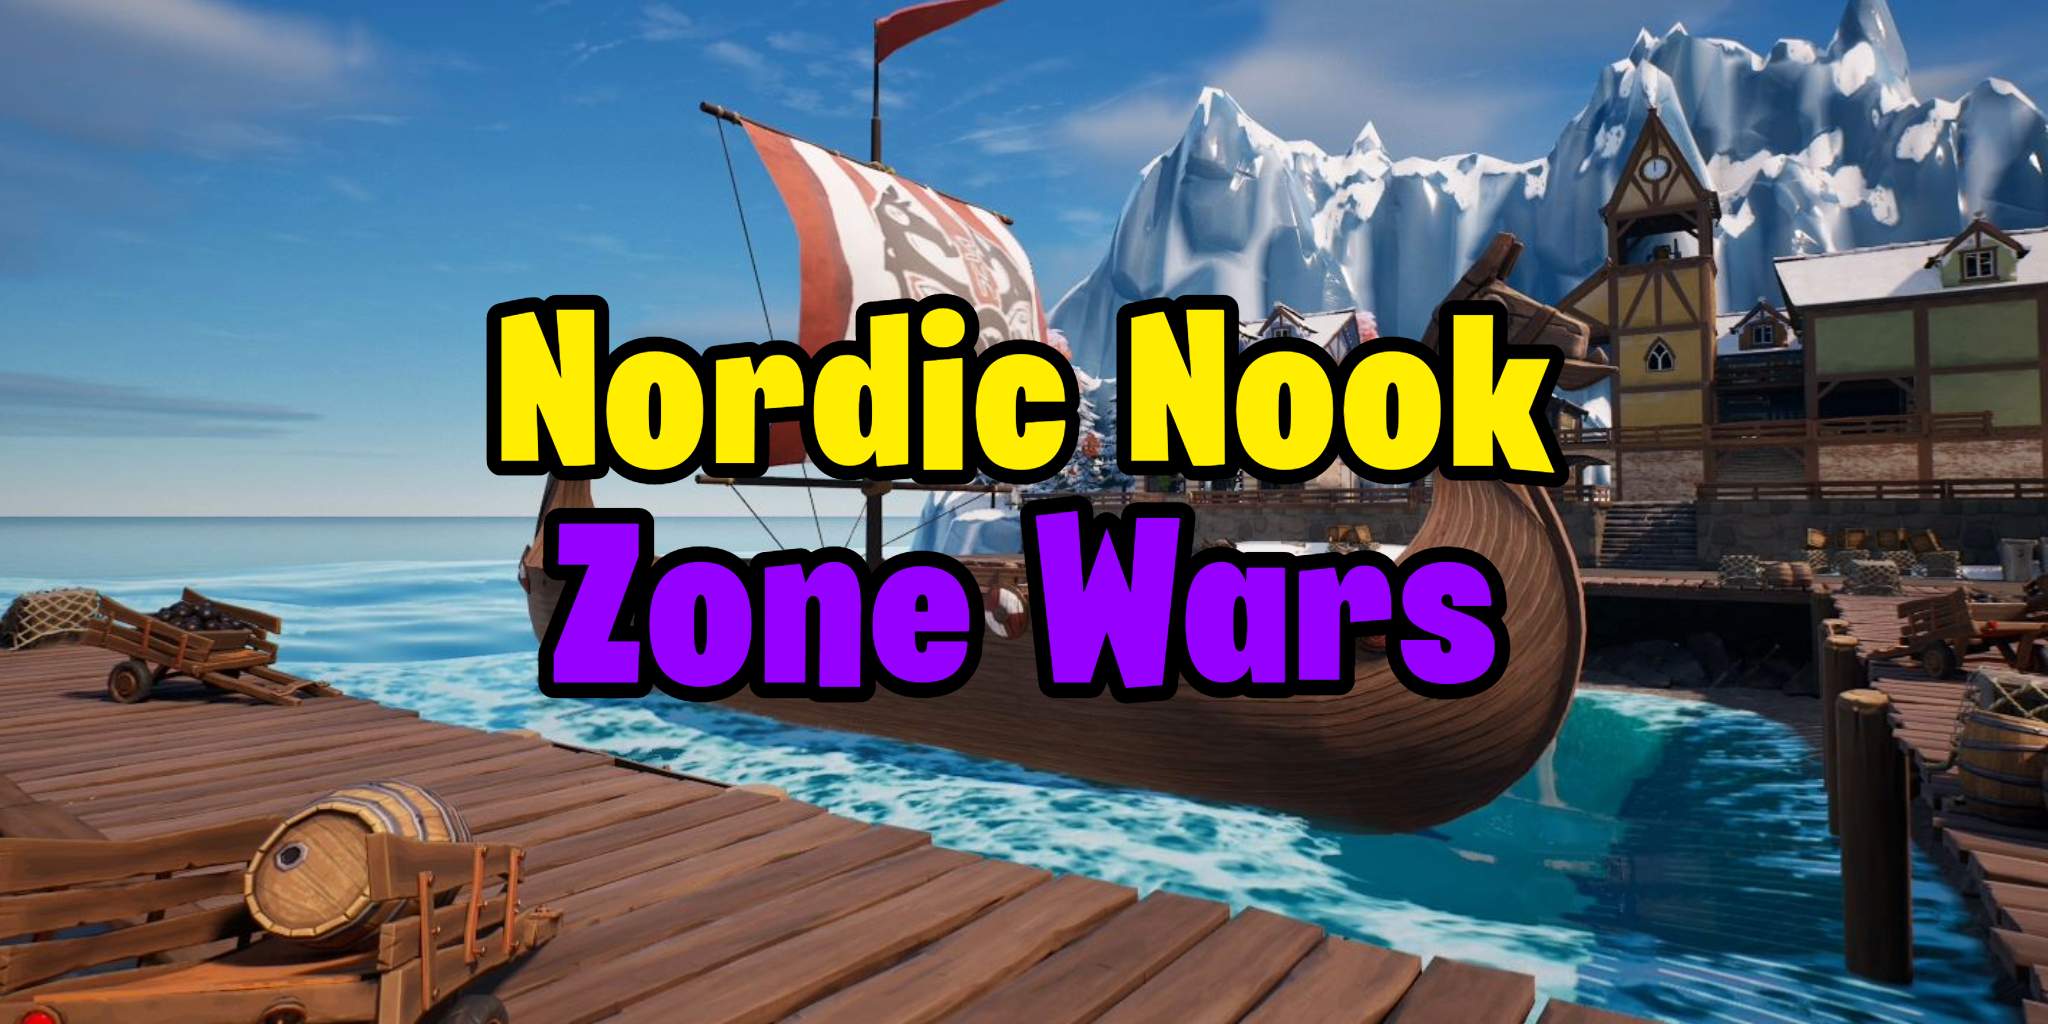 Nordic Nook Zone Wars image 2